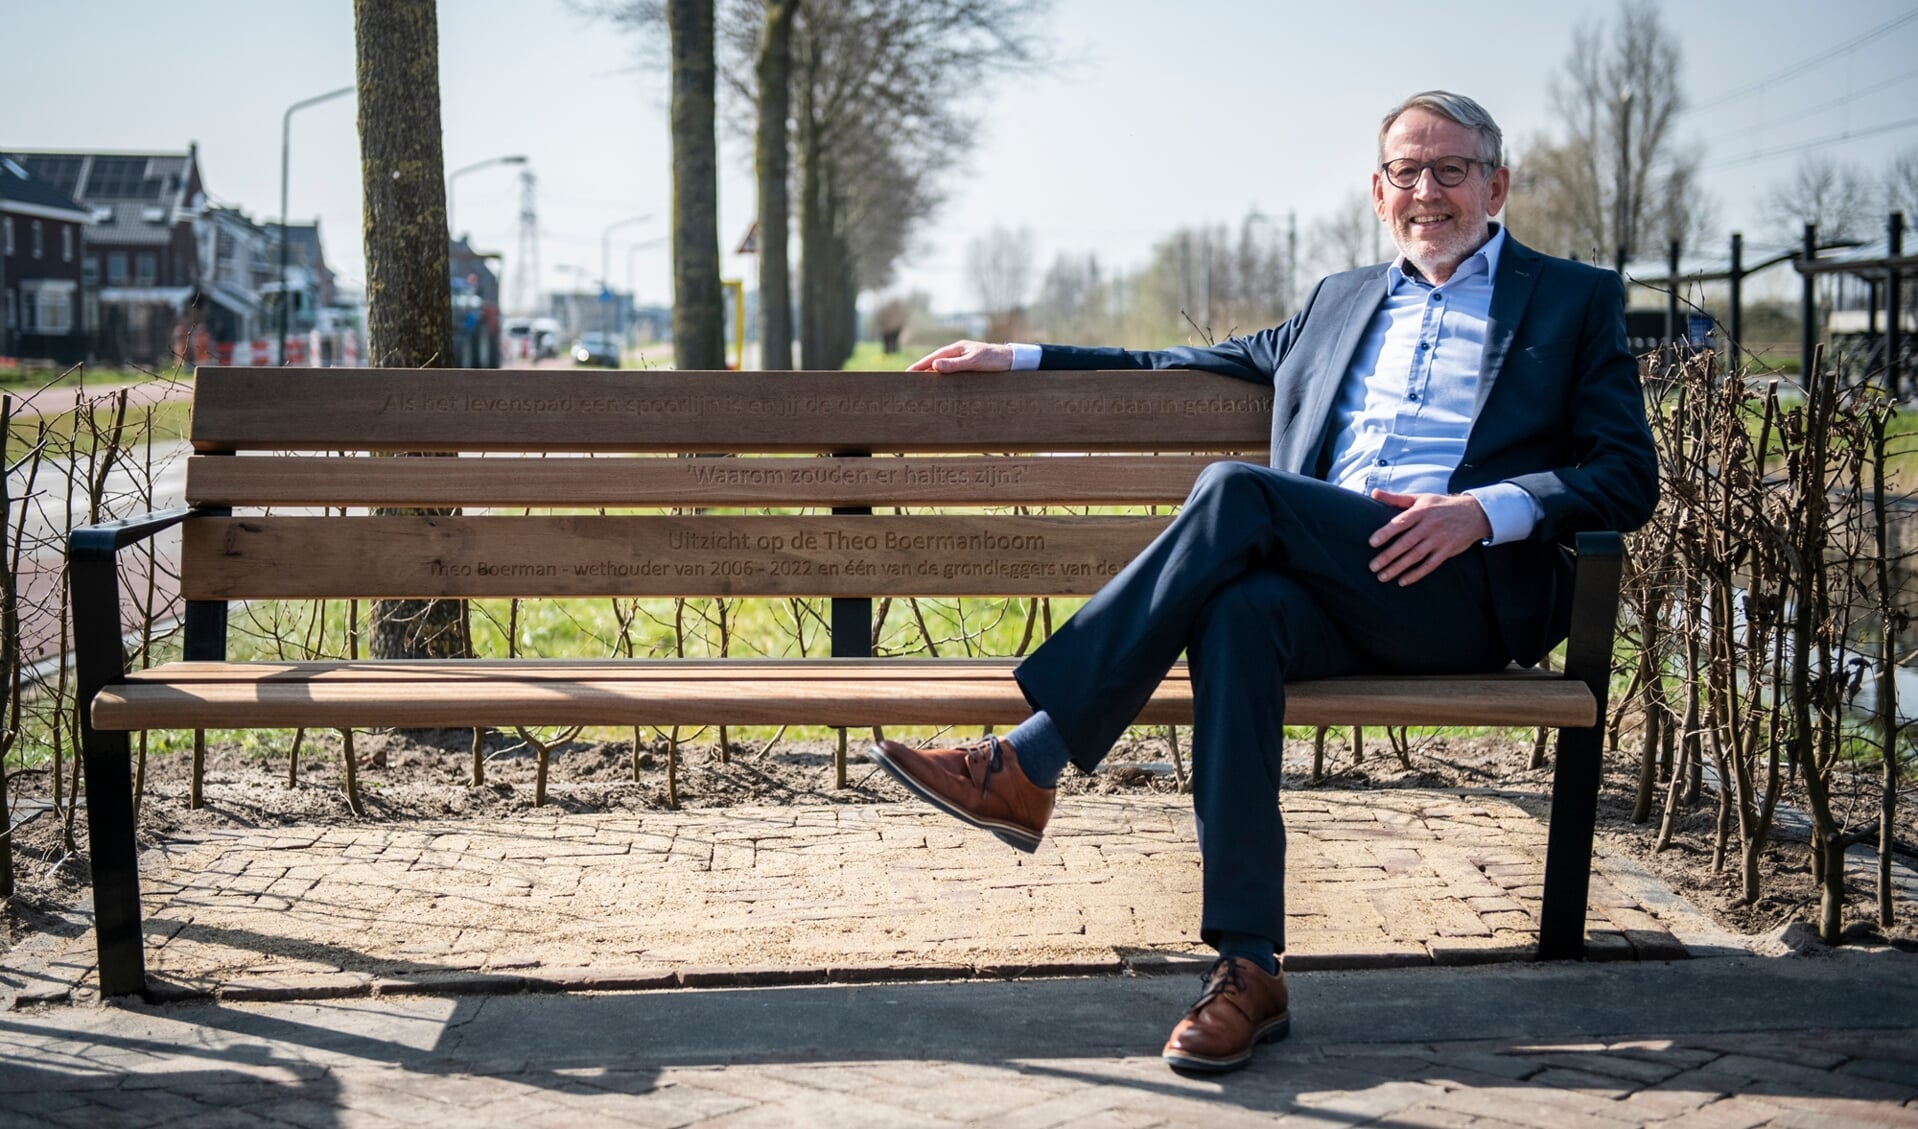 Wethouder Theo Boerman op zijn bankje op station Blauwe Zoom.